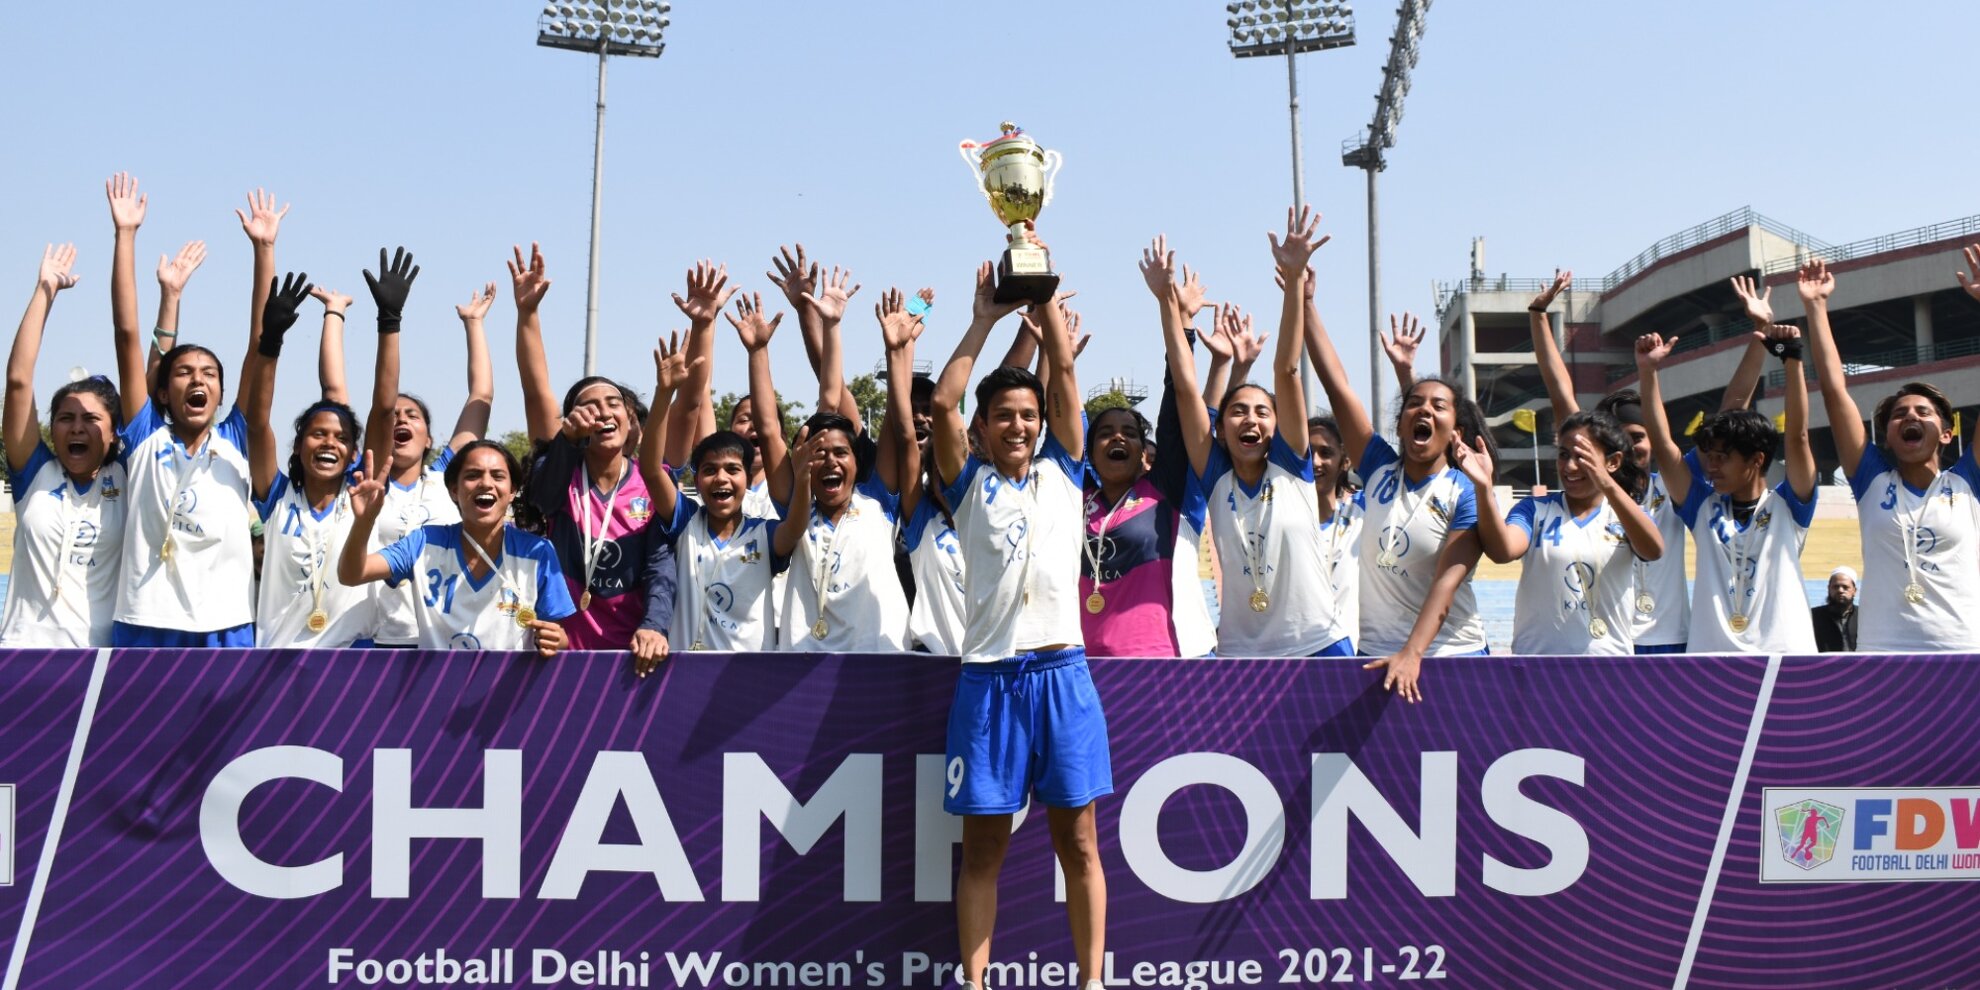 Football Delhi Women's Premier League Champions